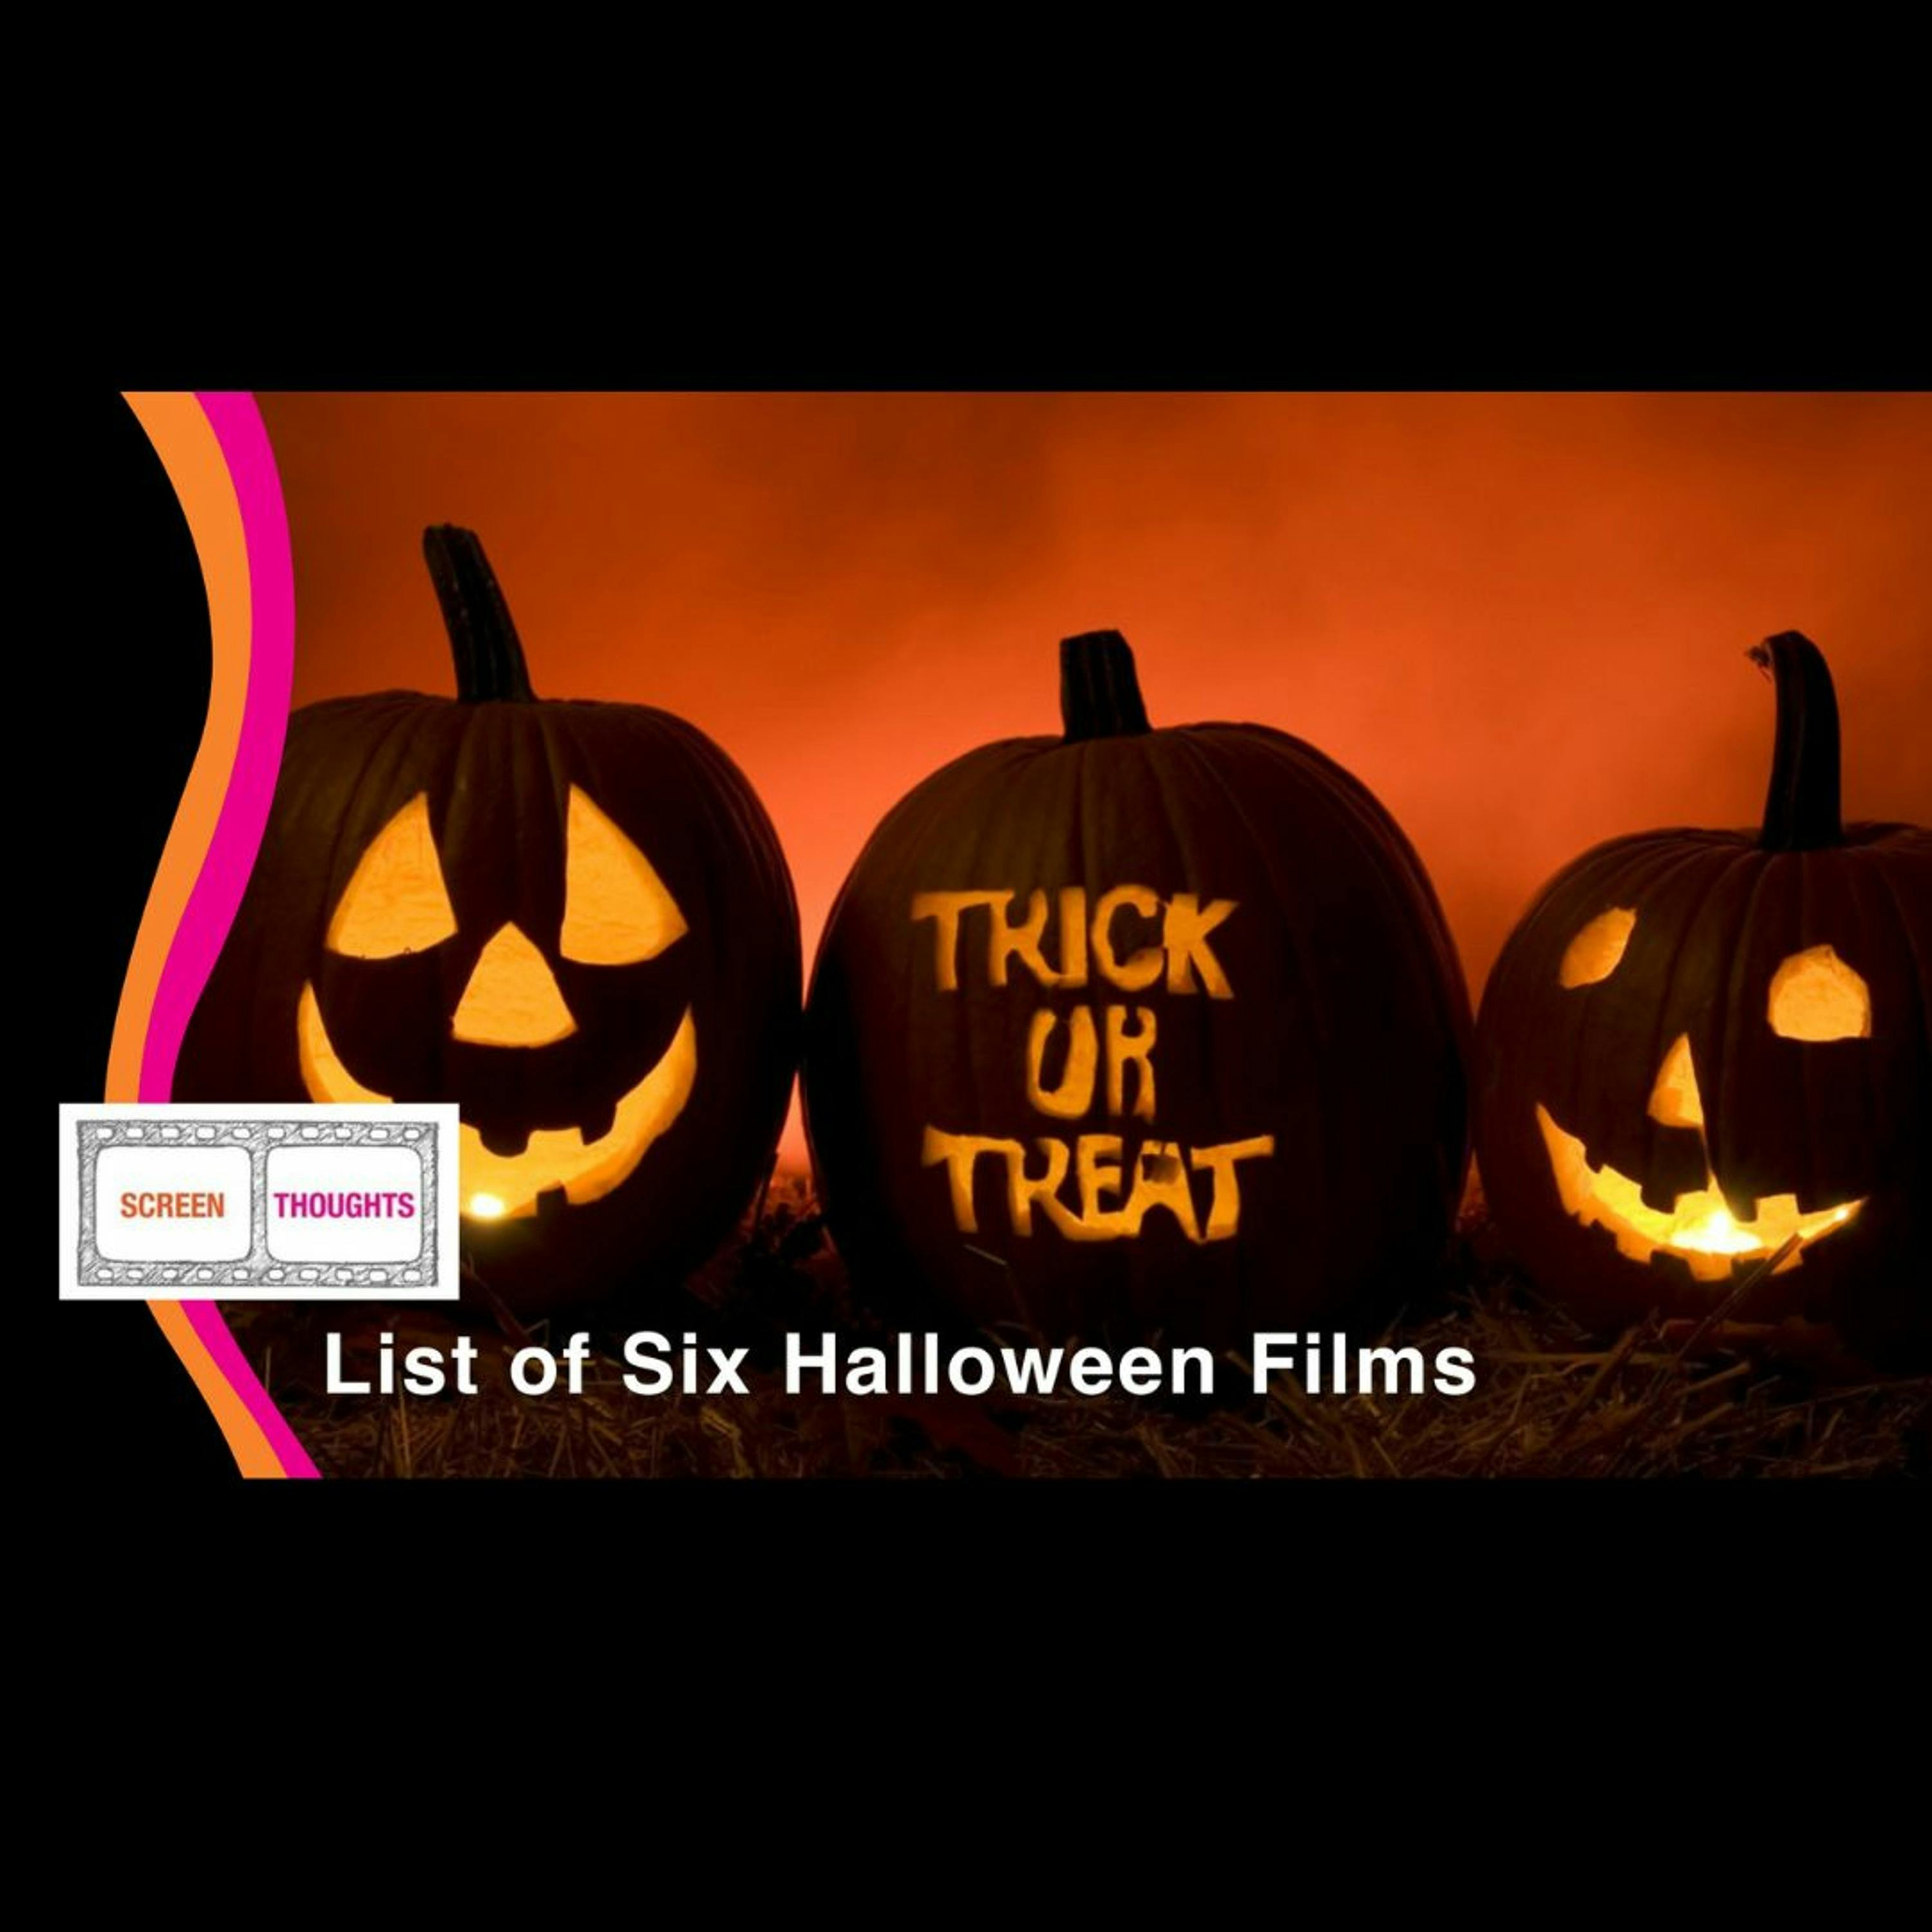 List of 6 Halloween Films